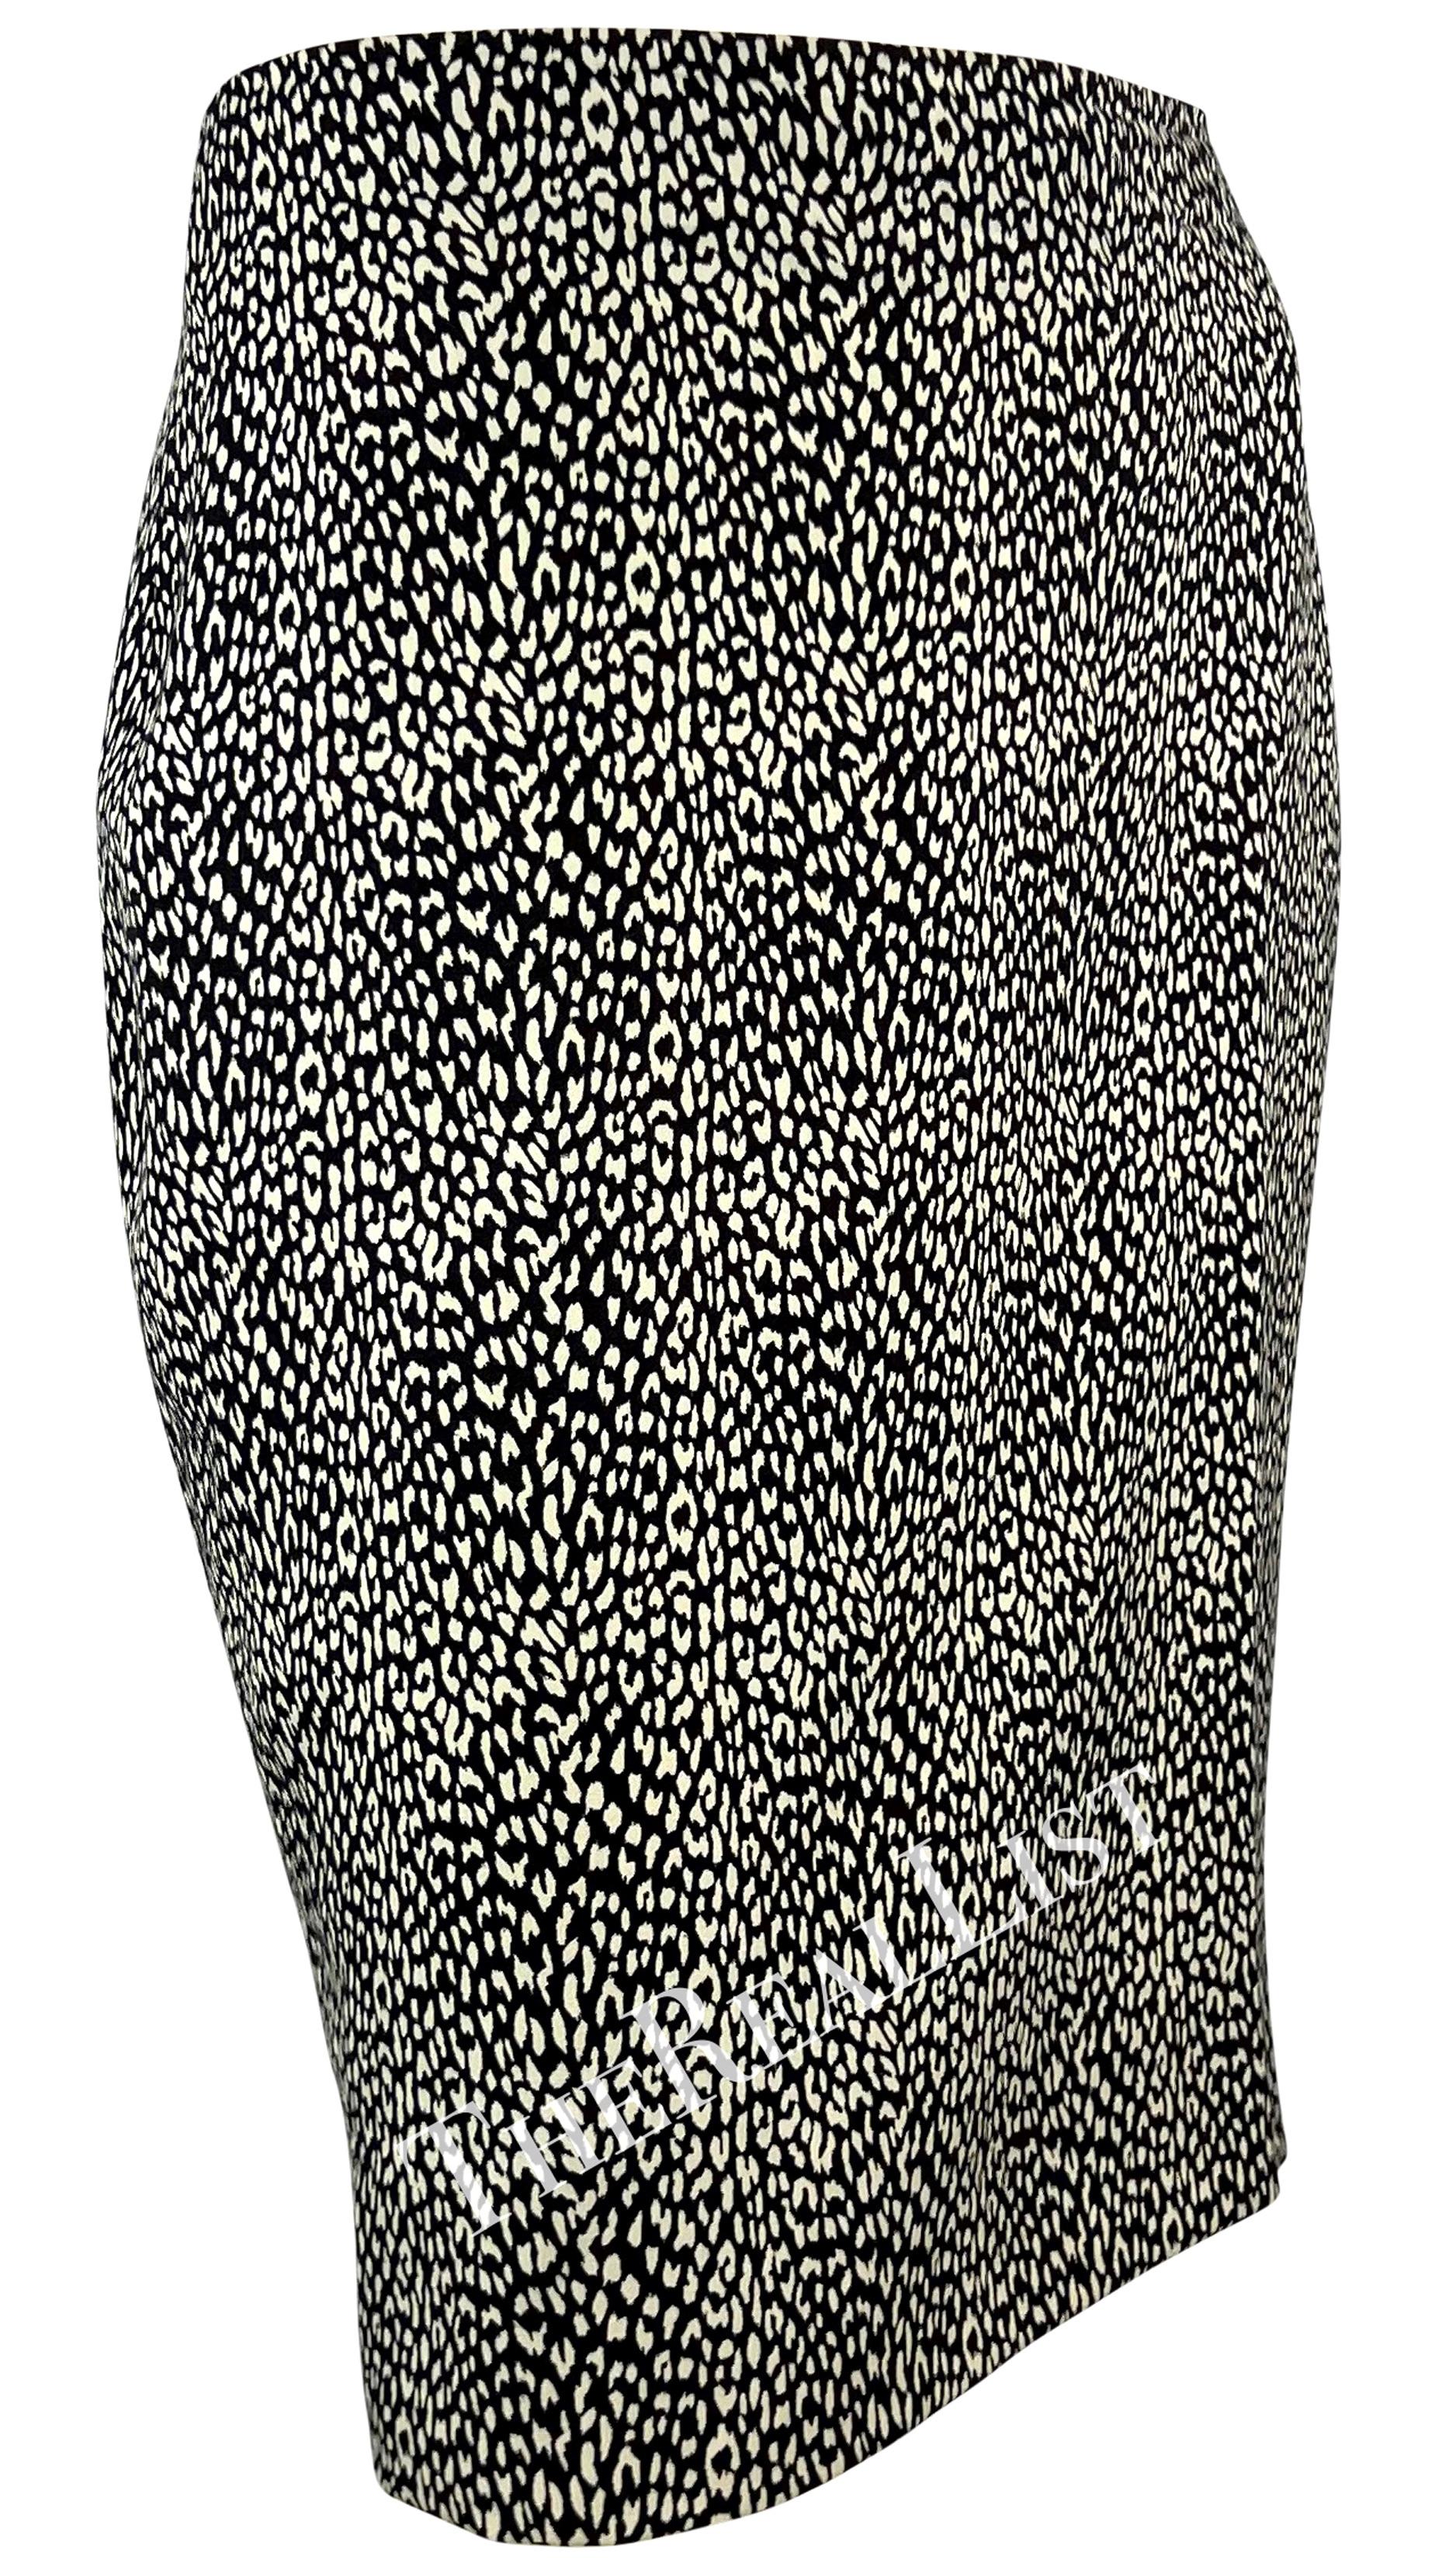 F/W 1996 Gianni Versace Couture Black White Cheetah Print Pencil Skirt  For Sale 2